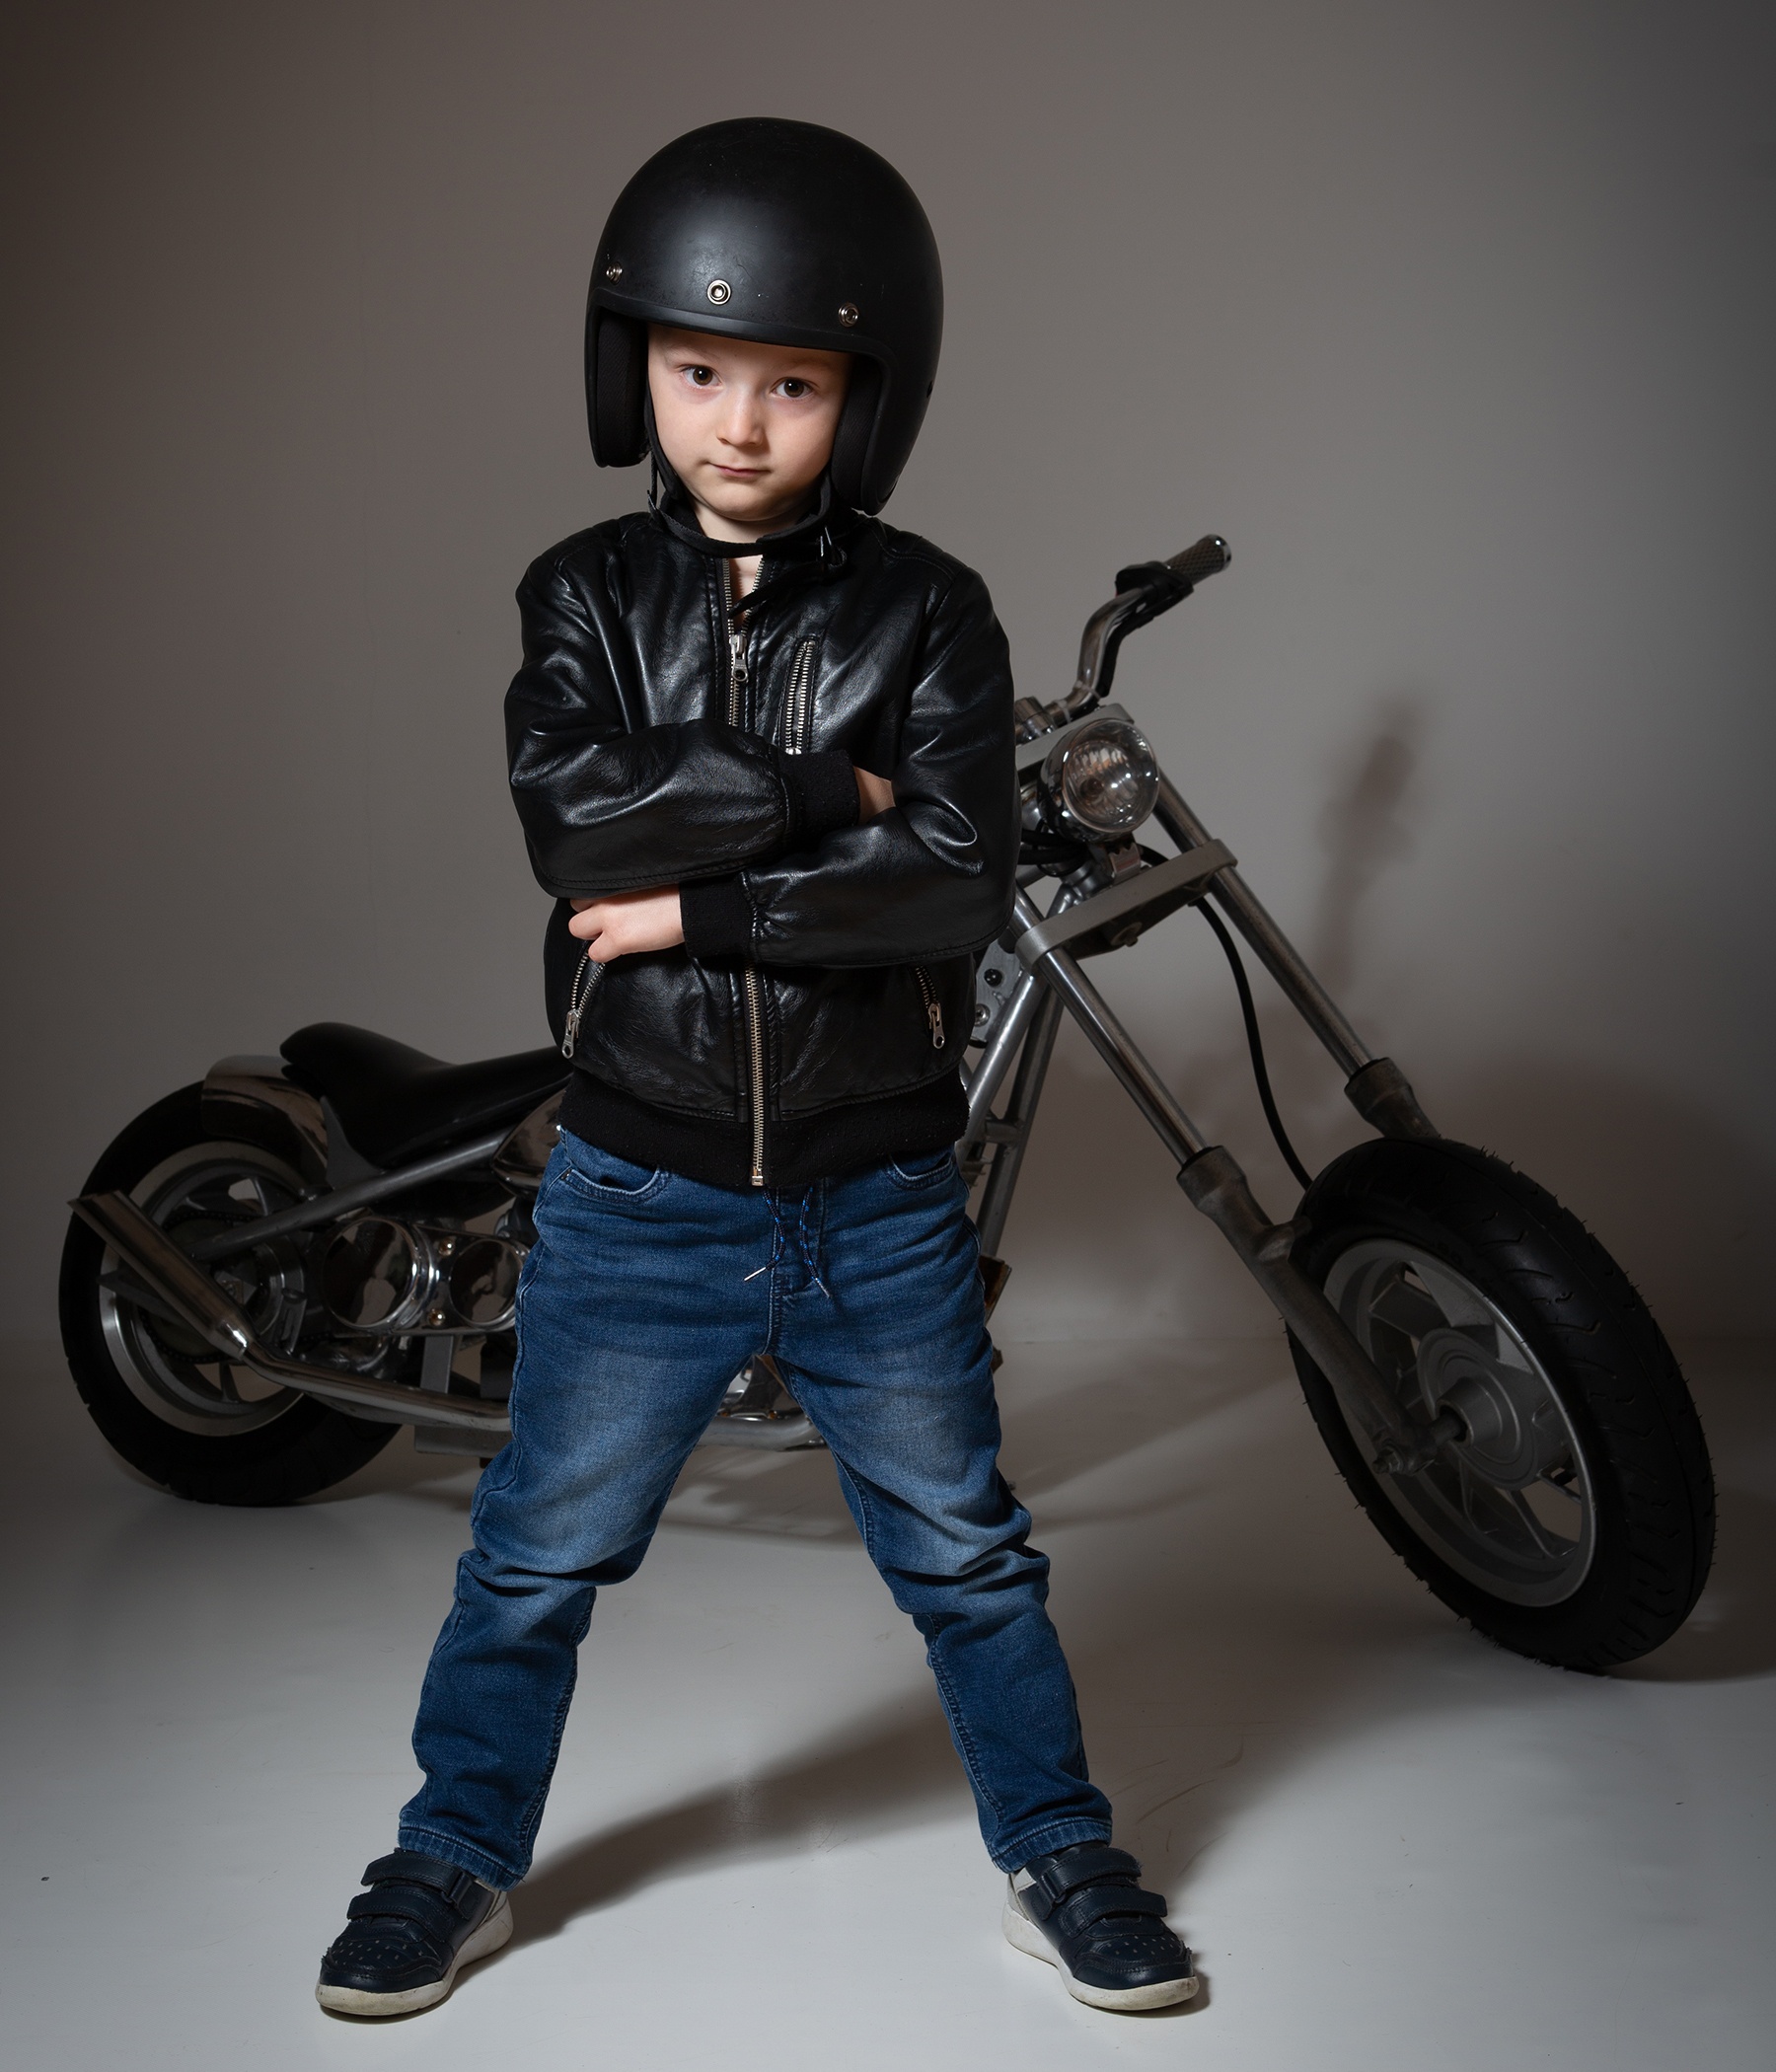 Register for Your Kids Biker Portrait Experience NOW! 8